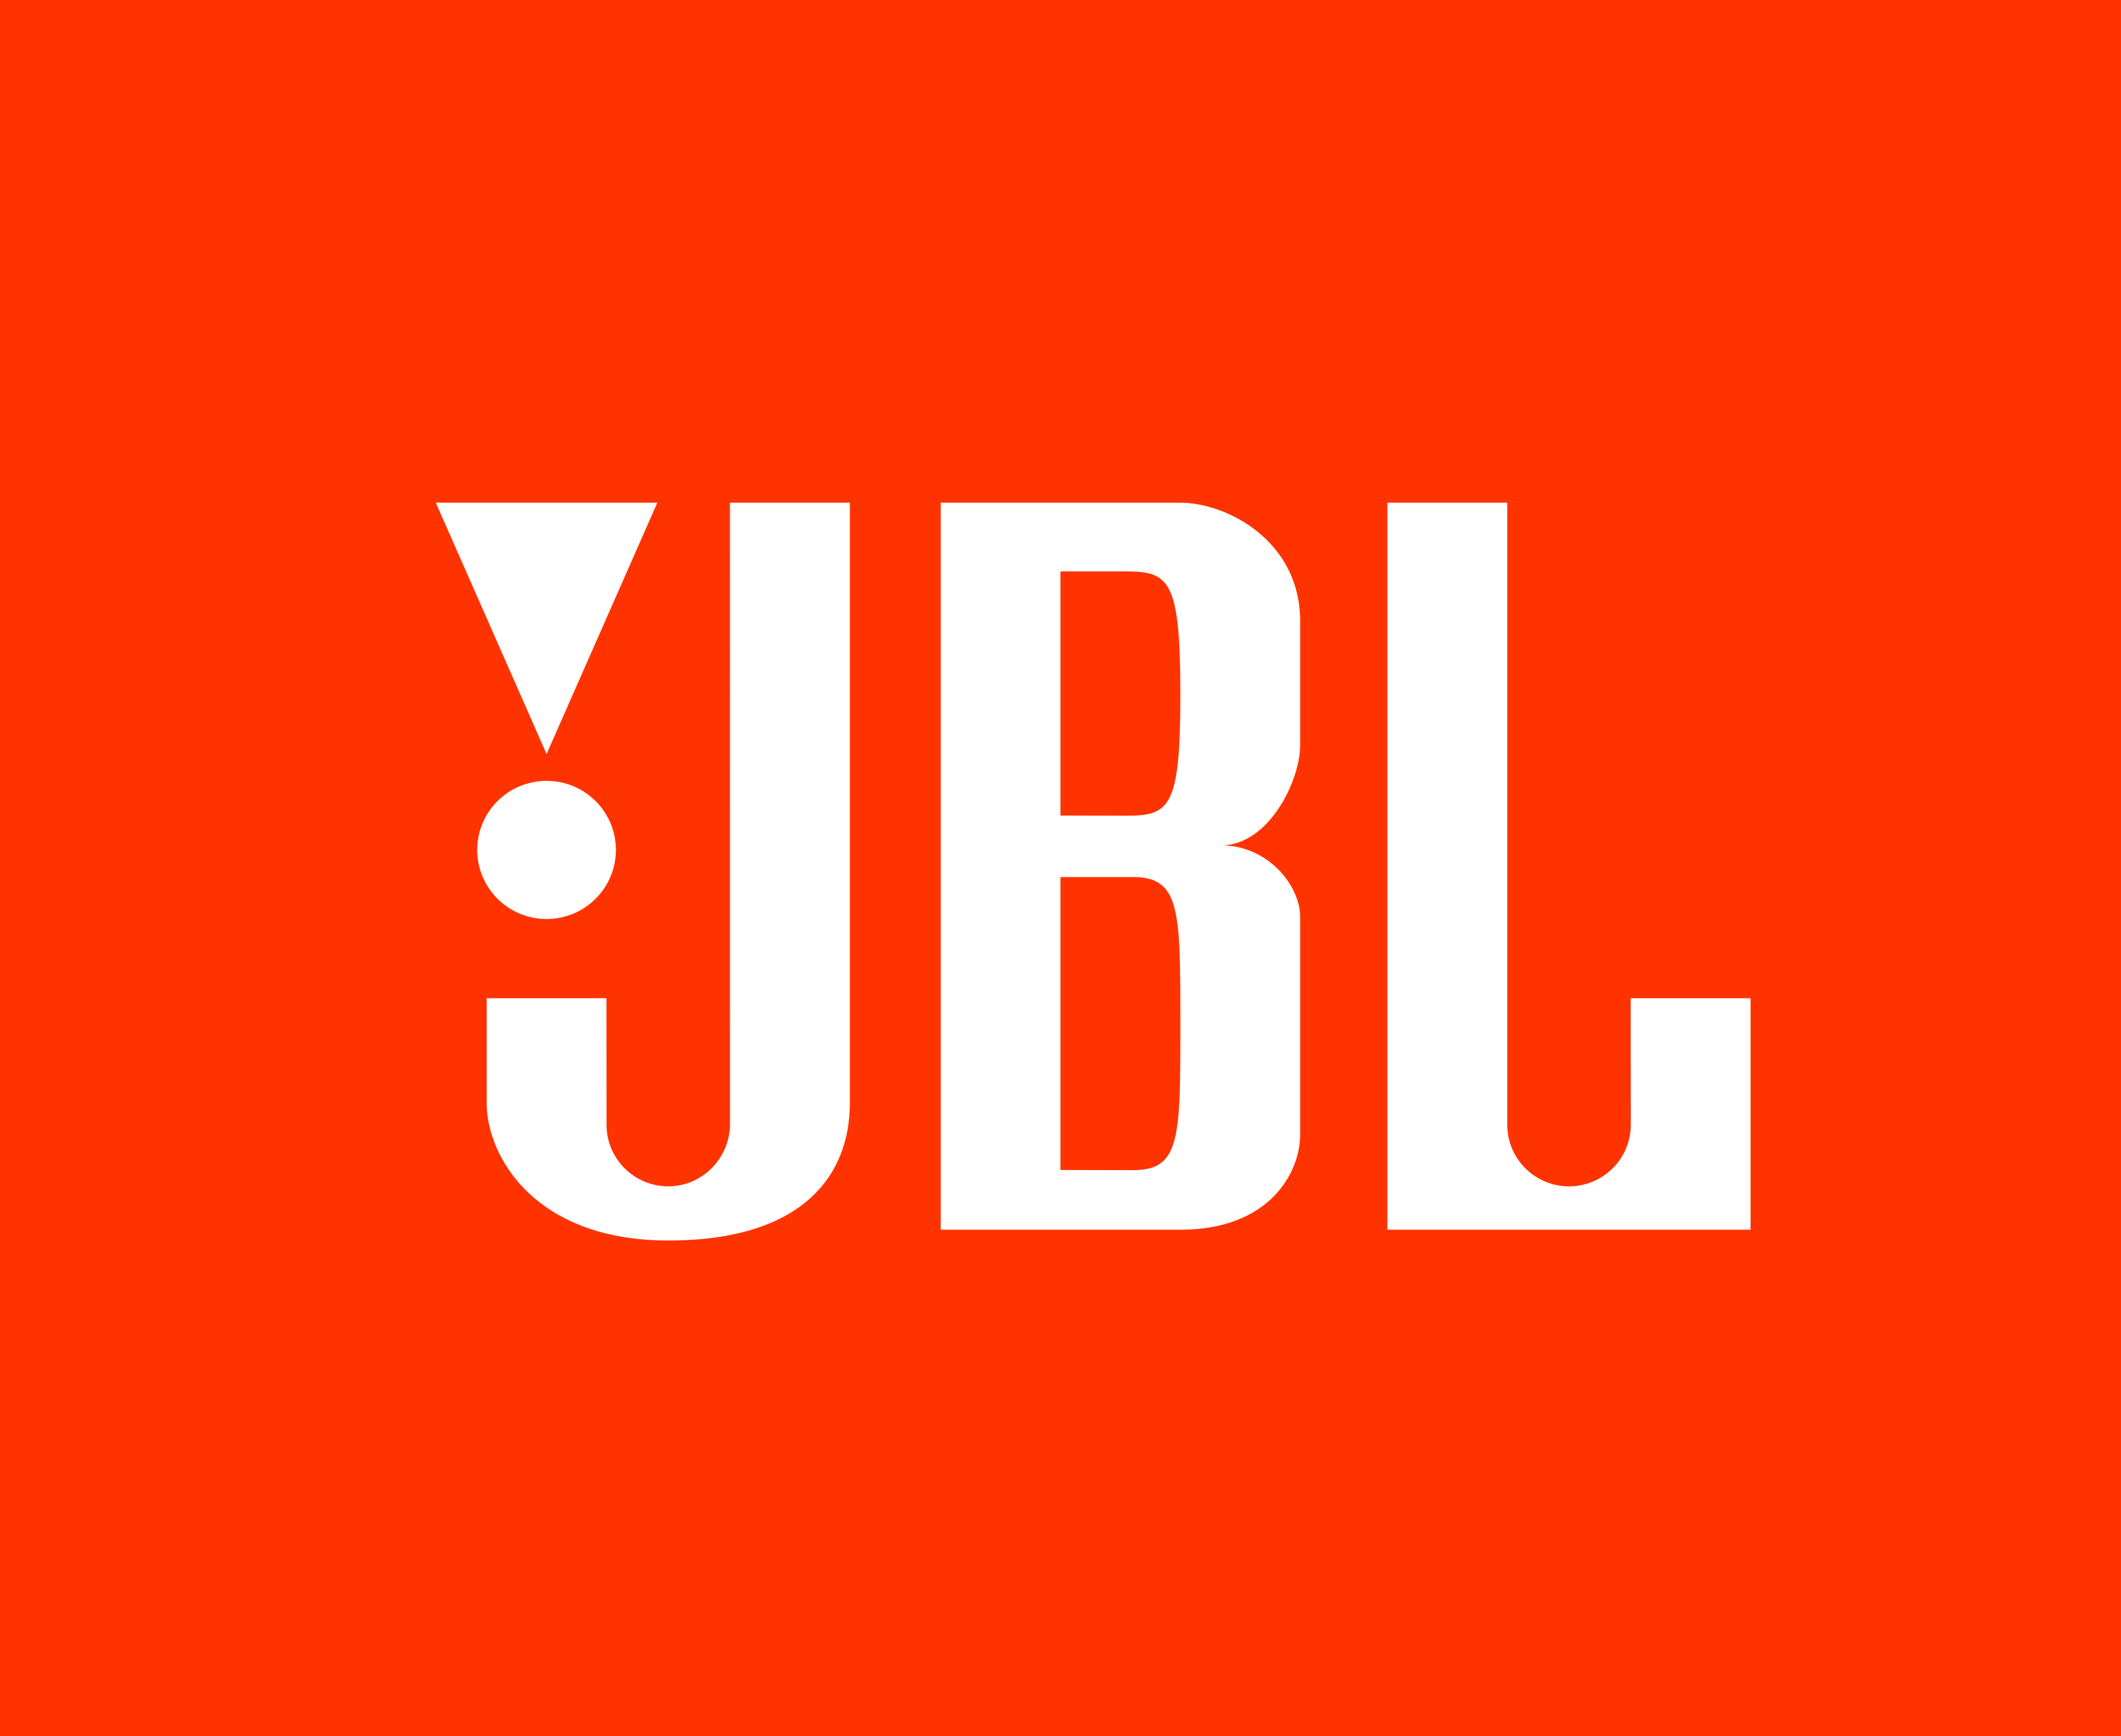 Jbl Logo   Png And Vector   Logo Download - Jbl, Transparent background PNG HD thumbnail